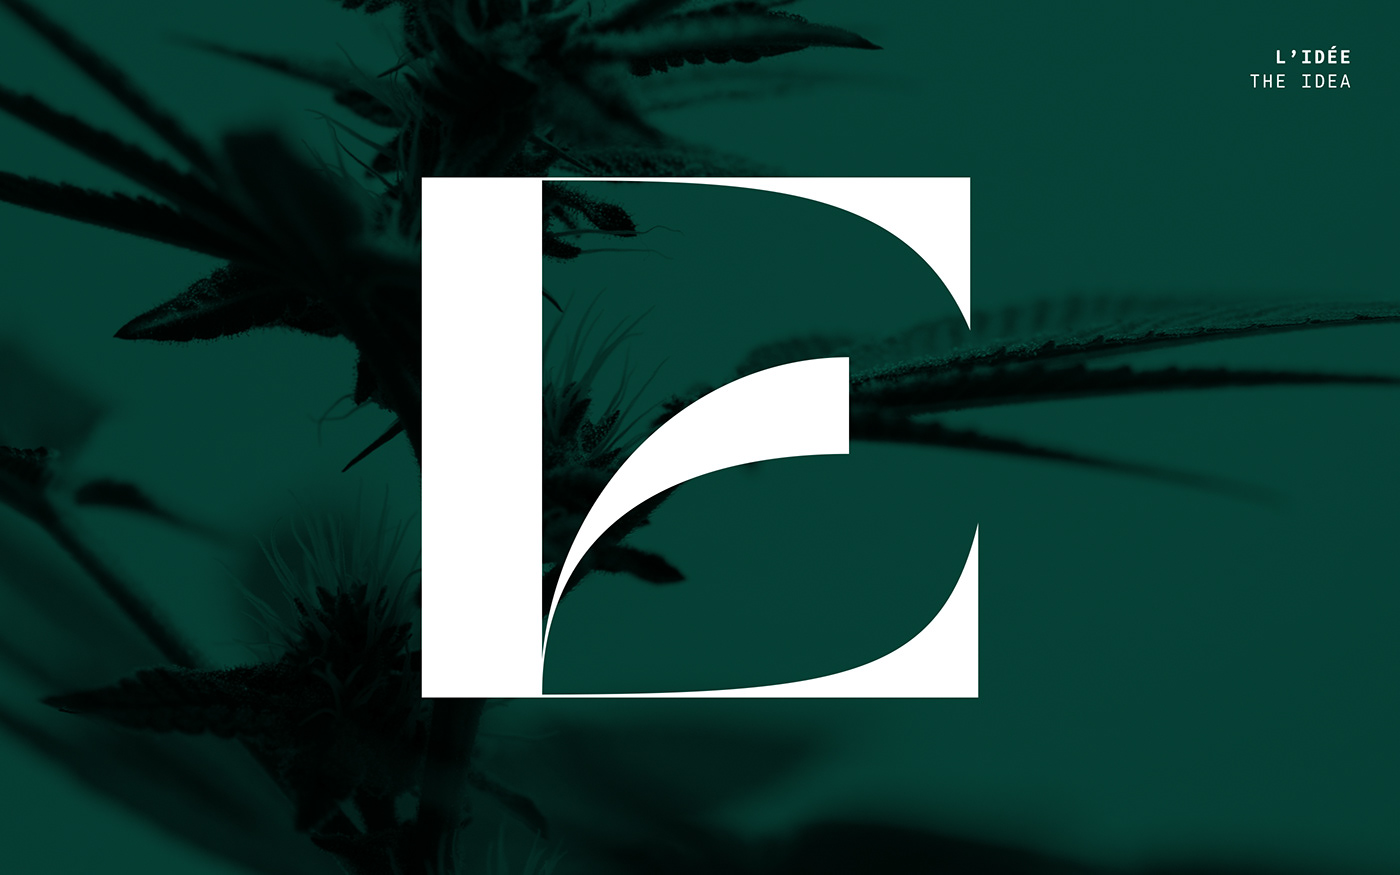 branding  cannabis CBD identity marijuana Packaging weed dispensary Logotype vegetal